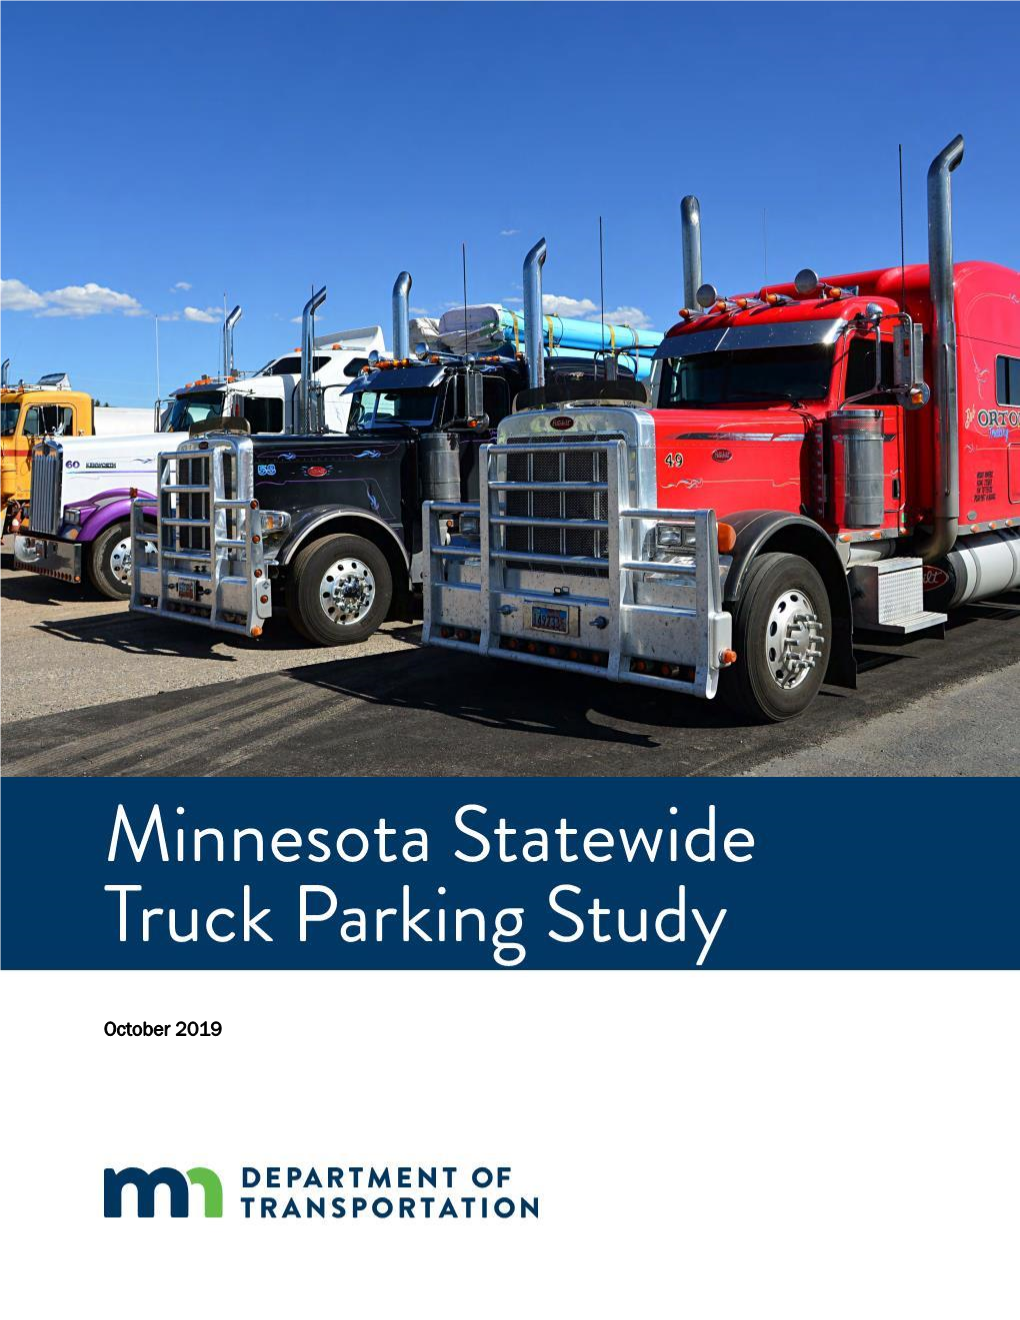 Minnesota Statewide Truck Parking Study 2019